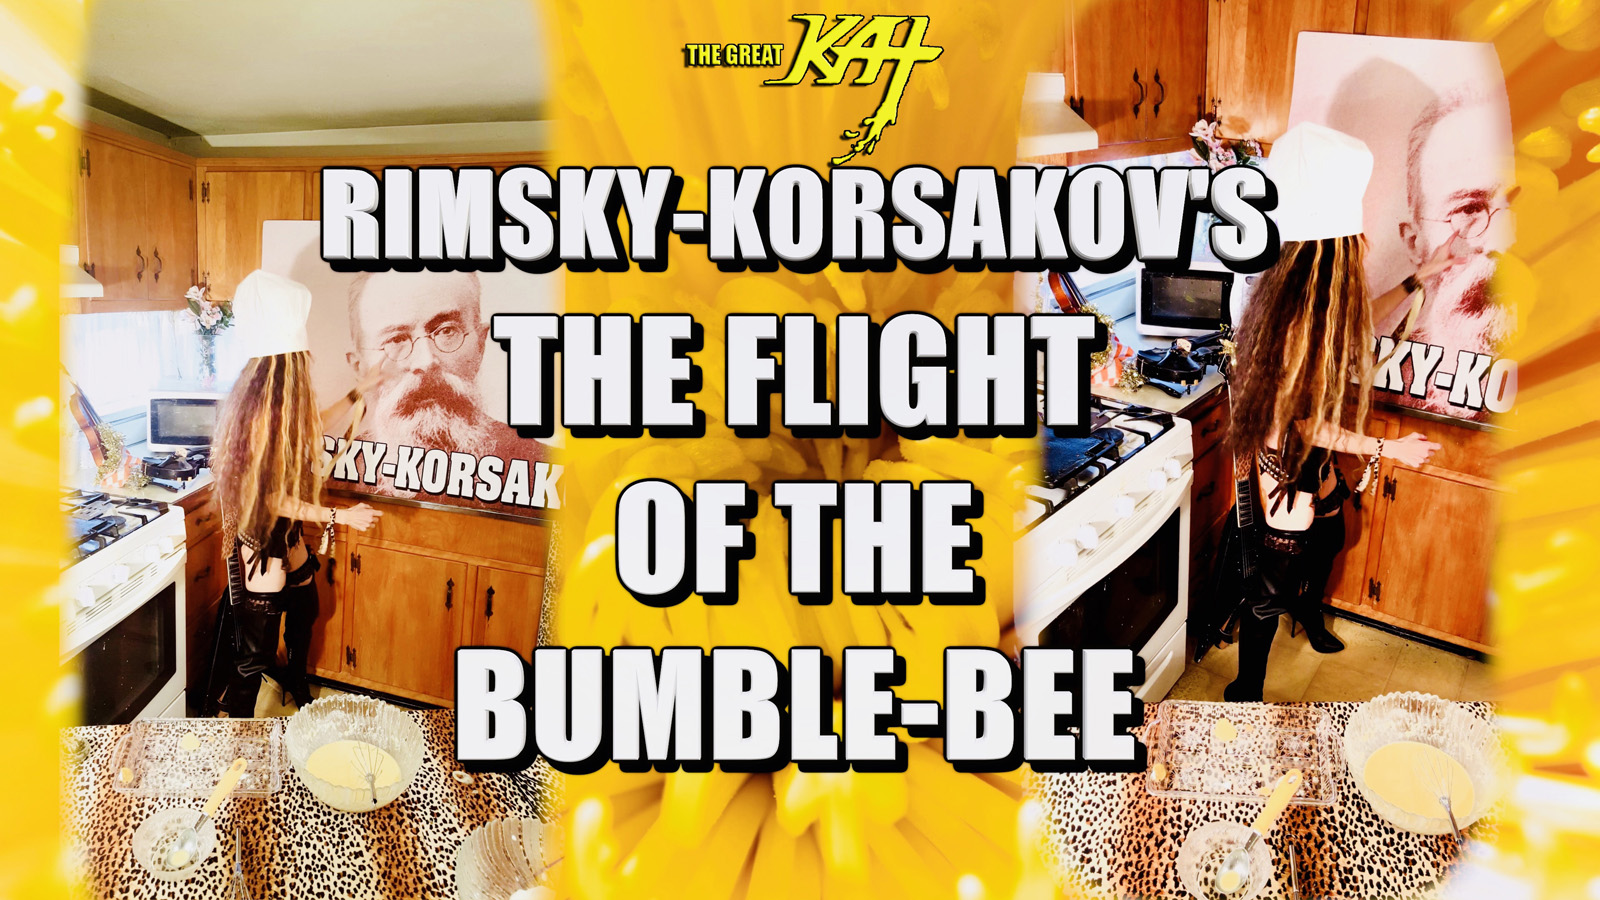 GODDESS TALKS TO RIMSKY-KORSAKOV! From "CHEF GREAT KAT COOKS RUSSIAN CAVIAR AND BLINI WITH RIMSKY-KORSAKOV" VIDEO!!